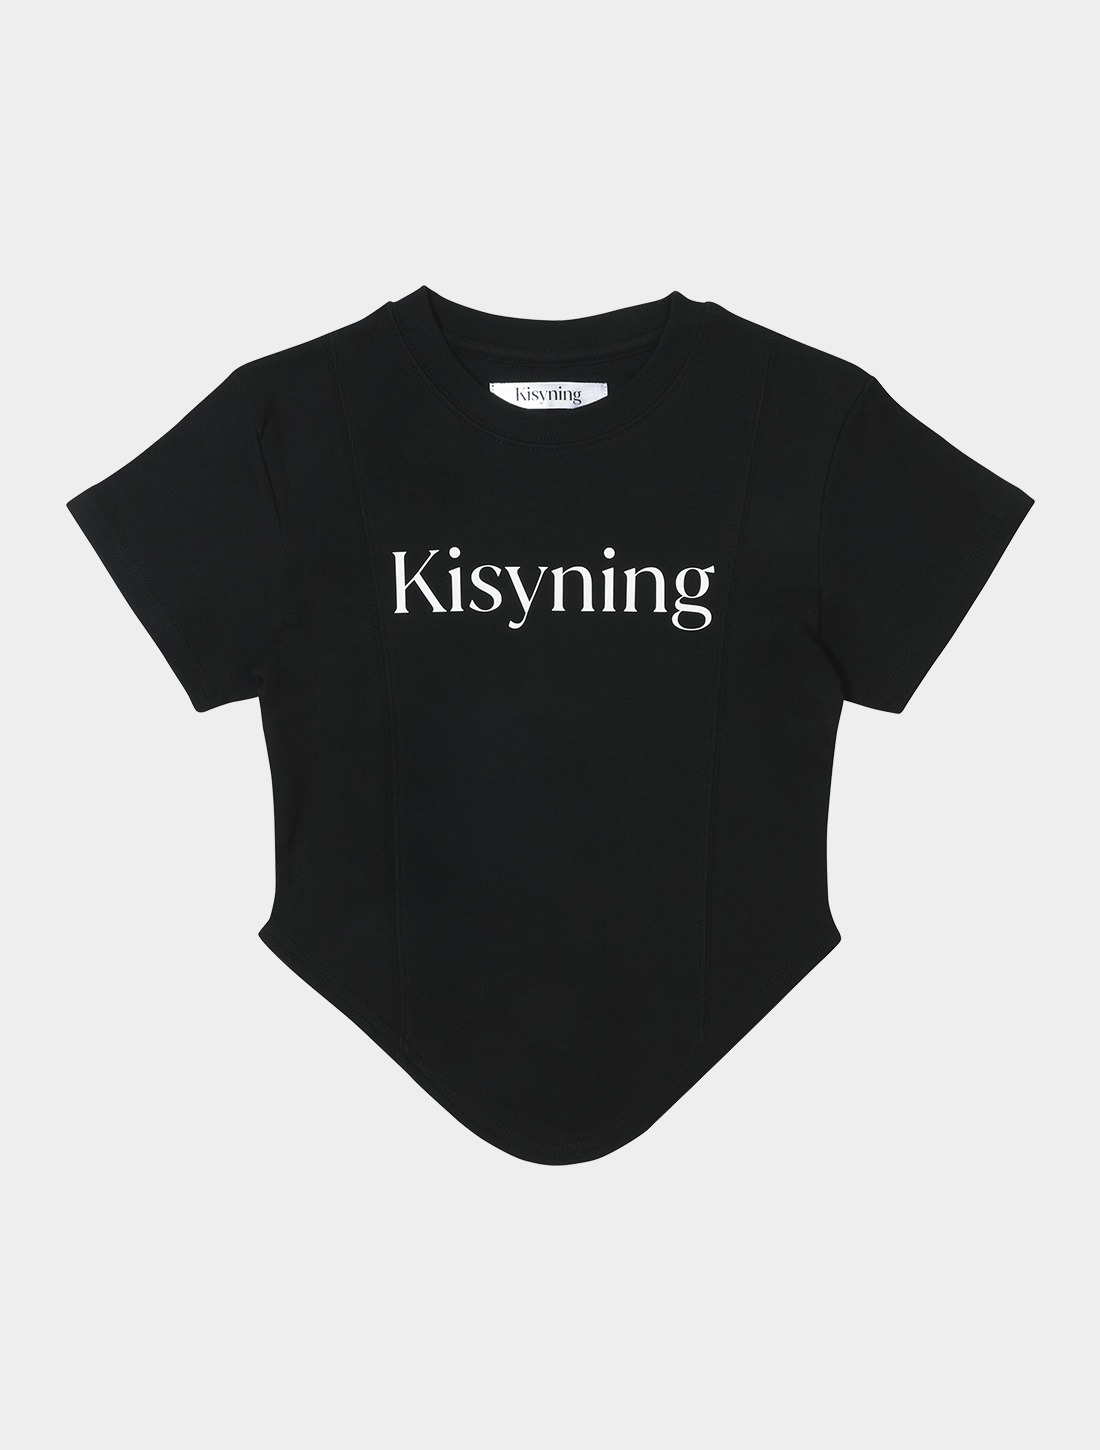 Kisyning round T-shirt (black)